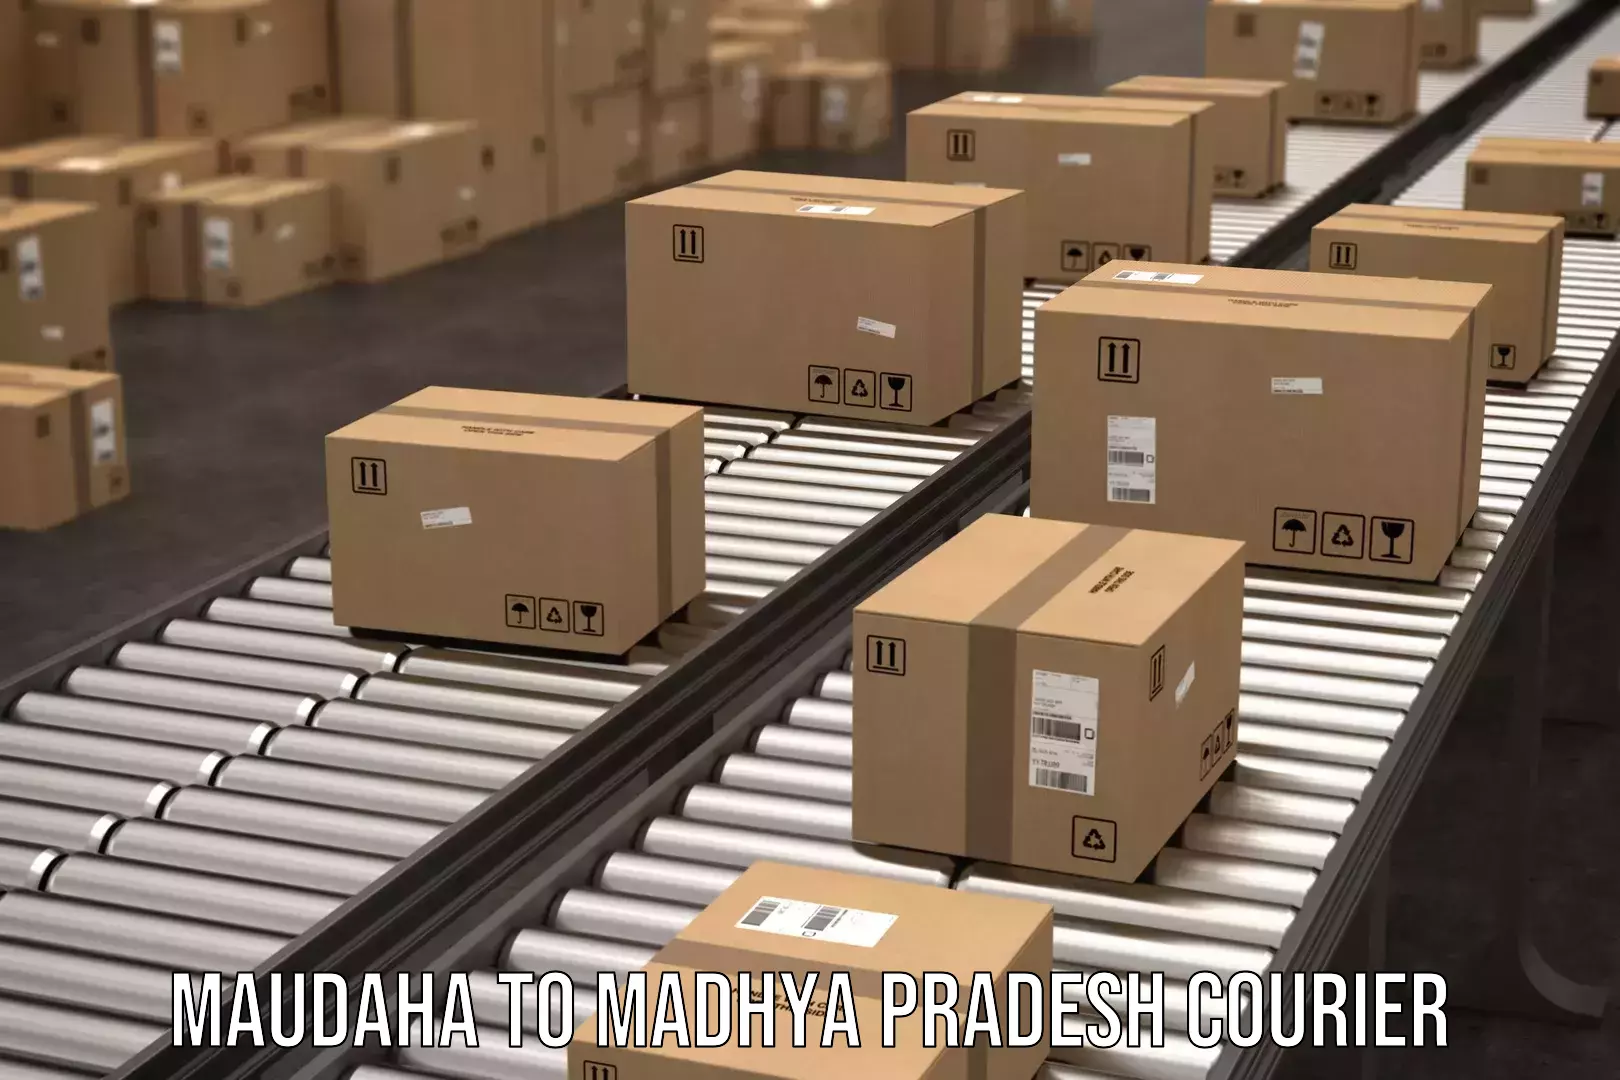 Express delivery capabilities Maudaha to Hatta